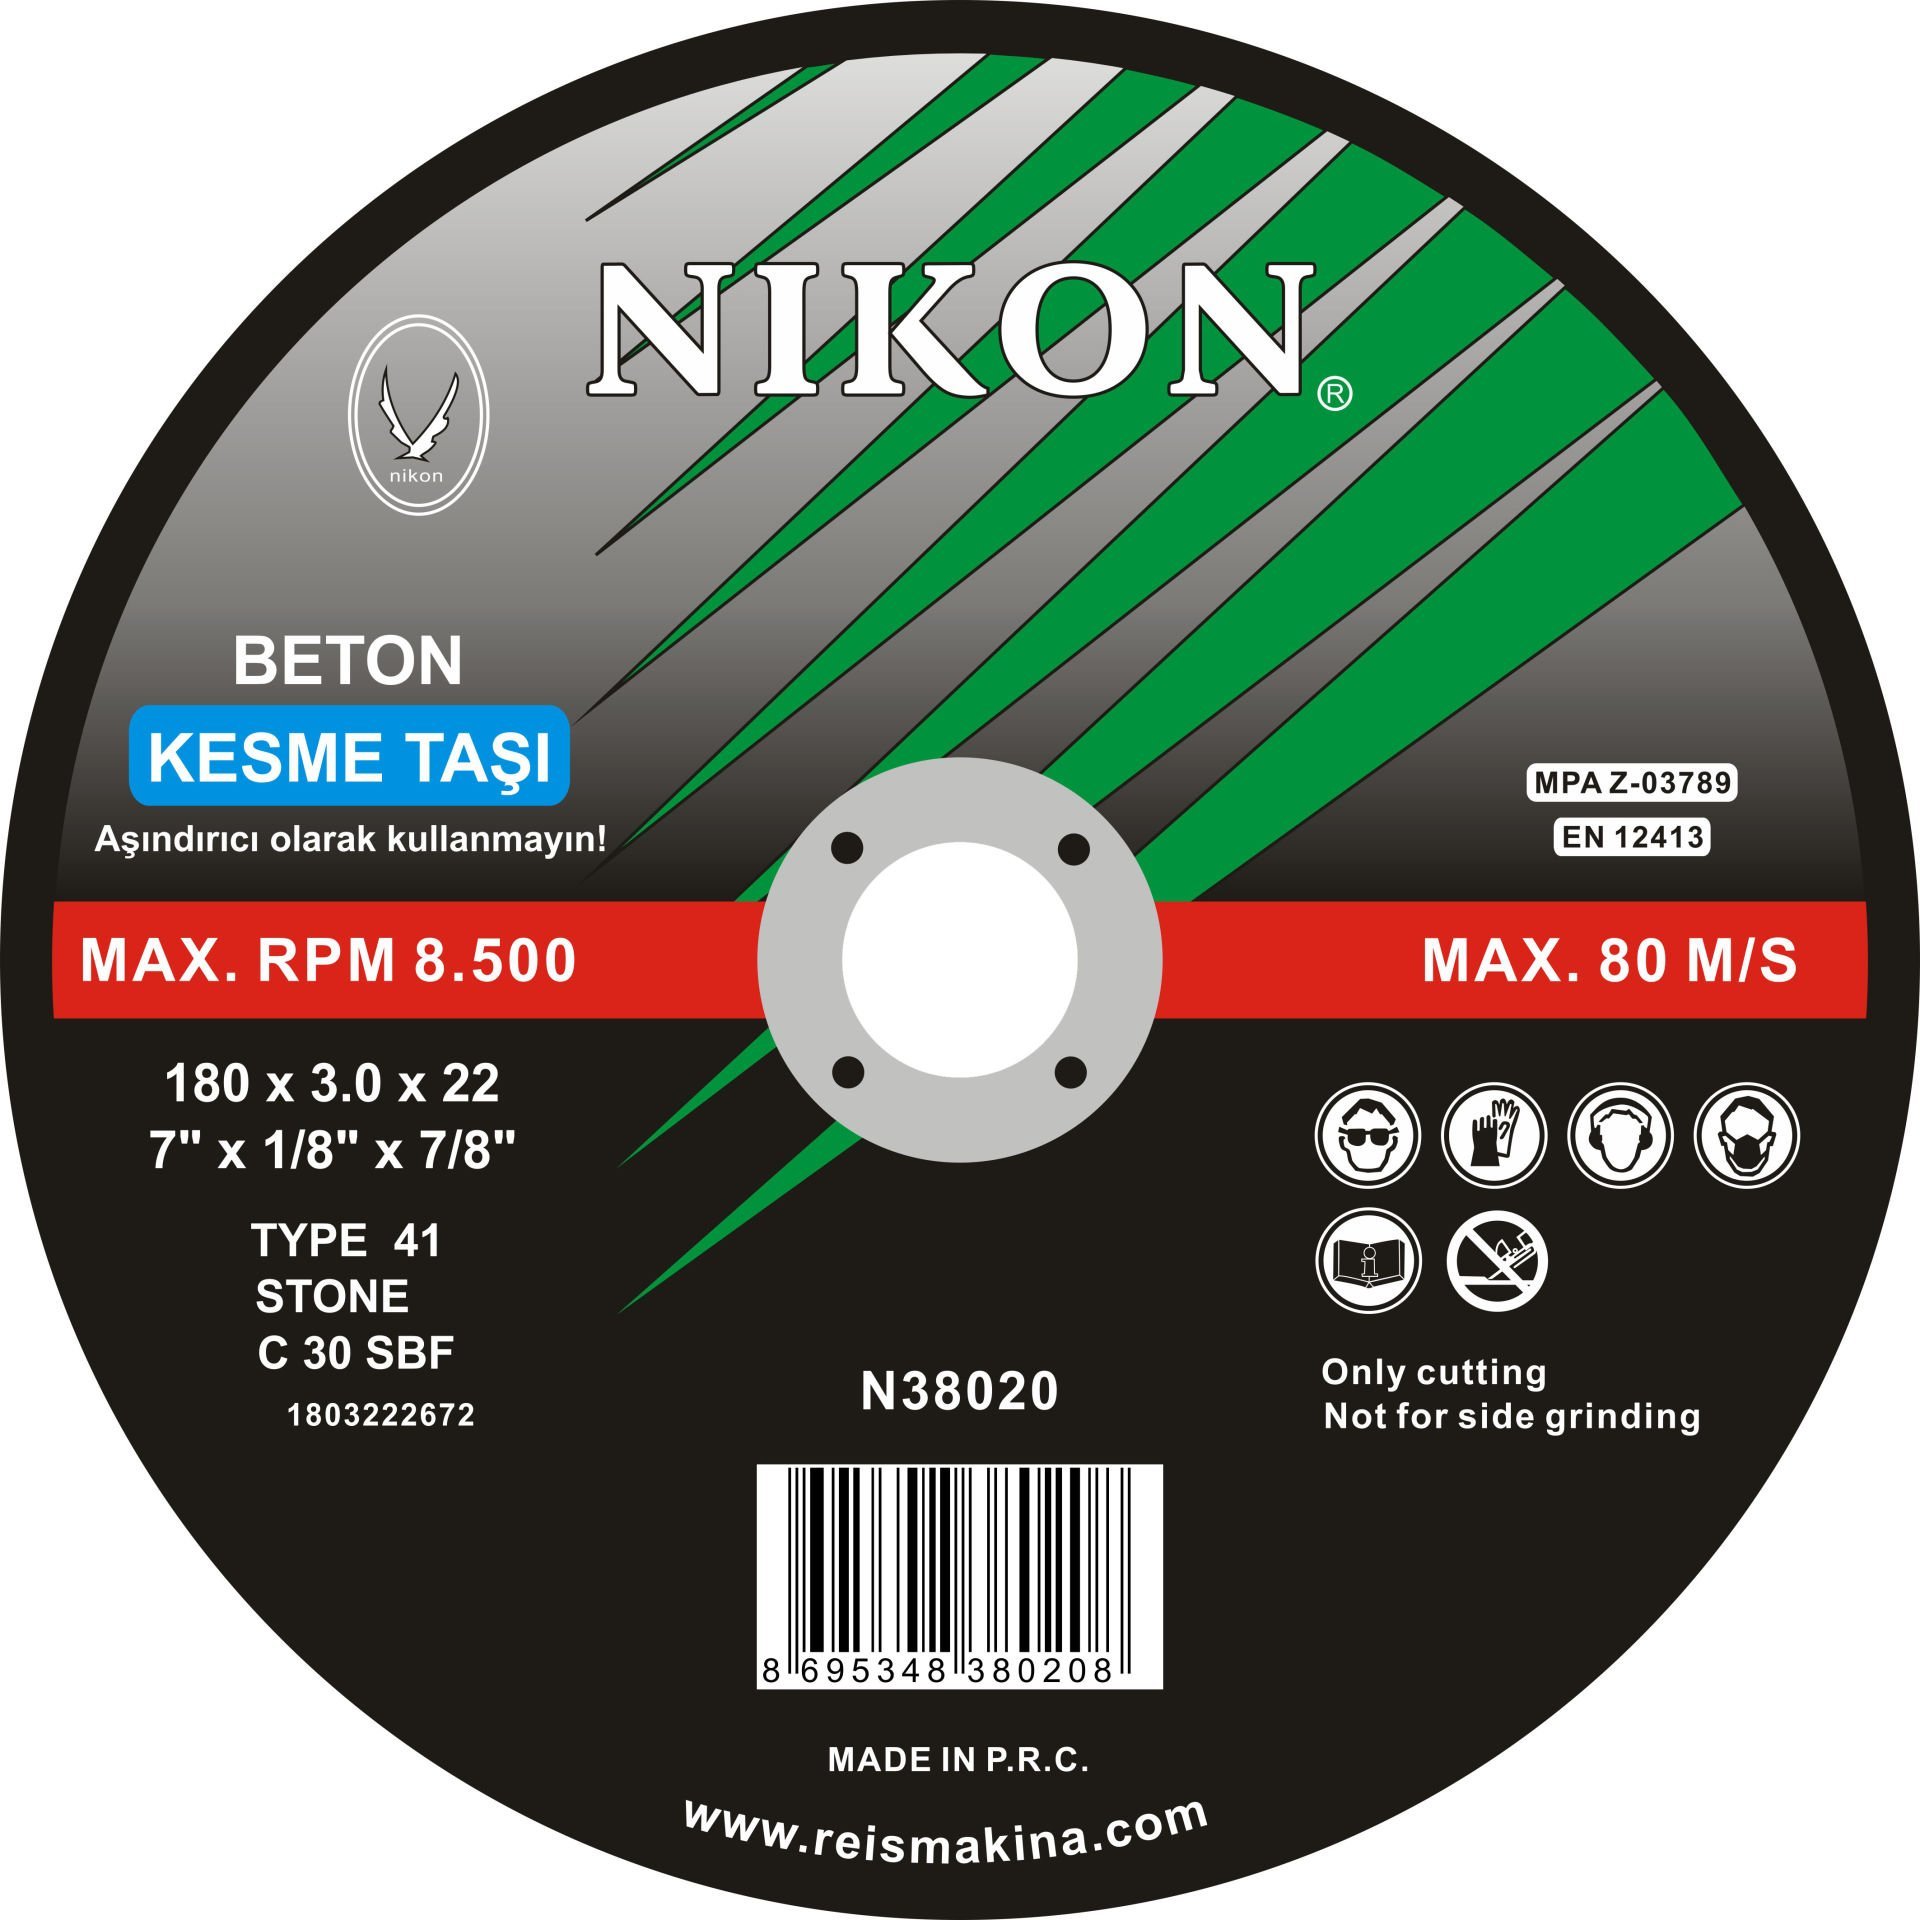 Nikon Beton Flex Kesme Taşı Düz 350x3.2x25.4mm 25 adet